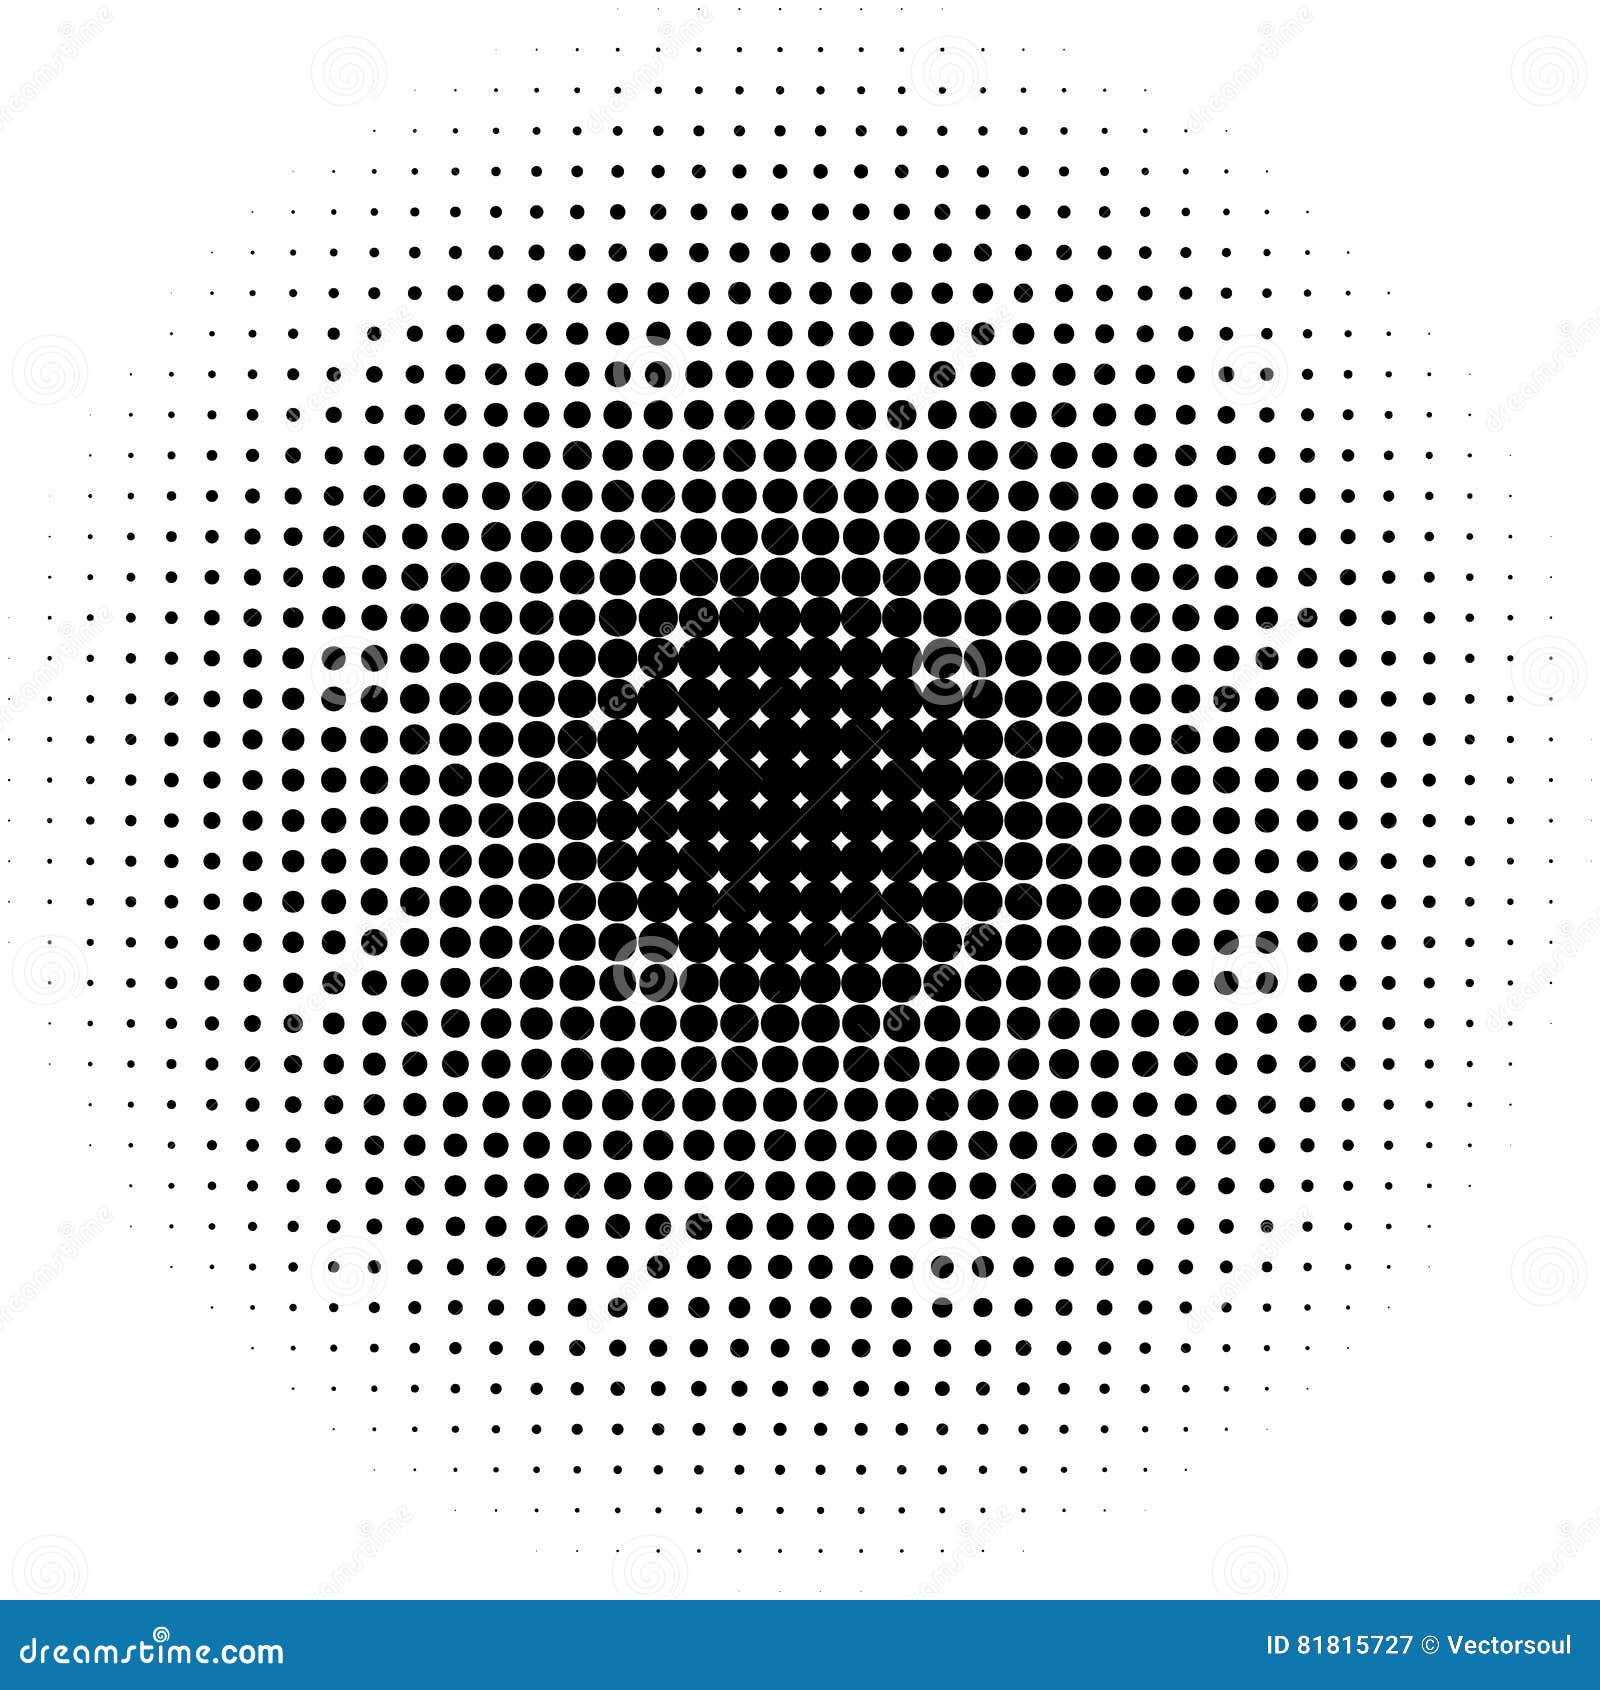 circle halftone pattern / texture. monochrome halftone dots.